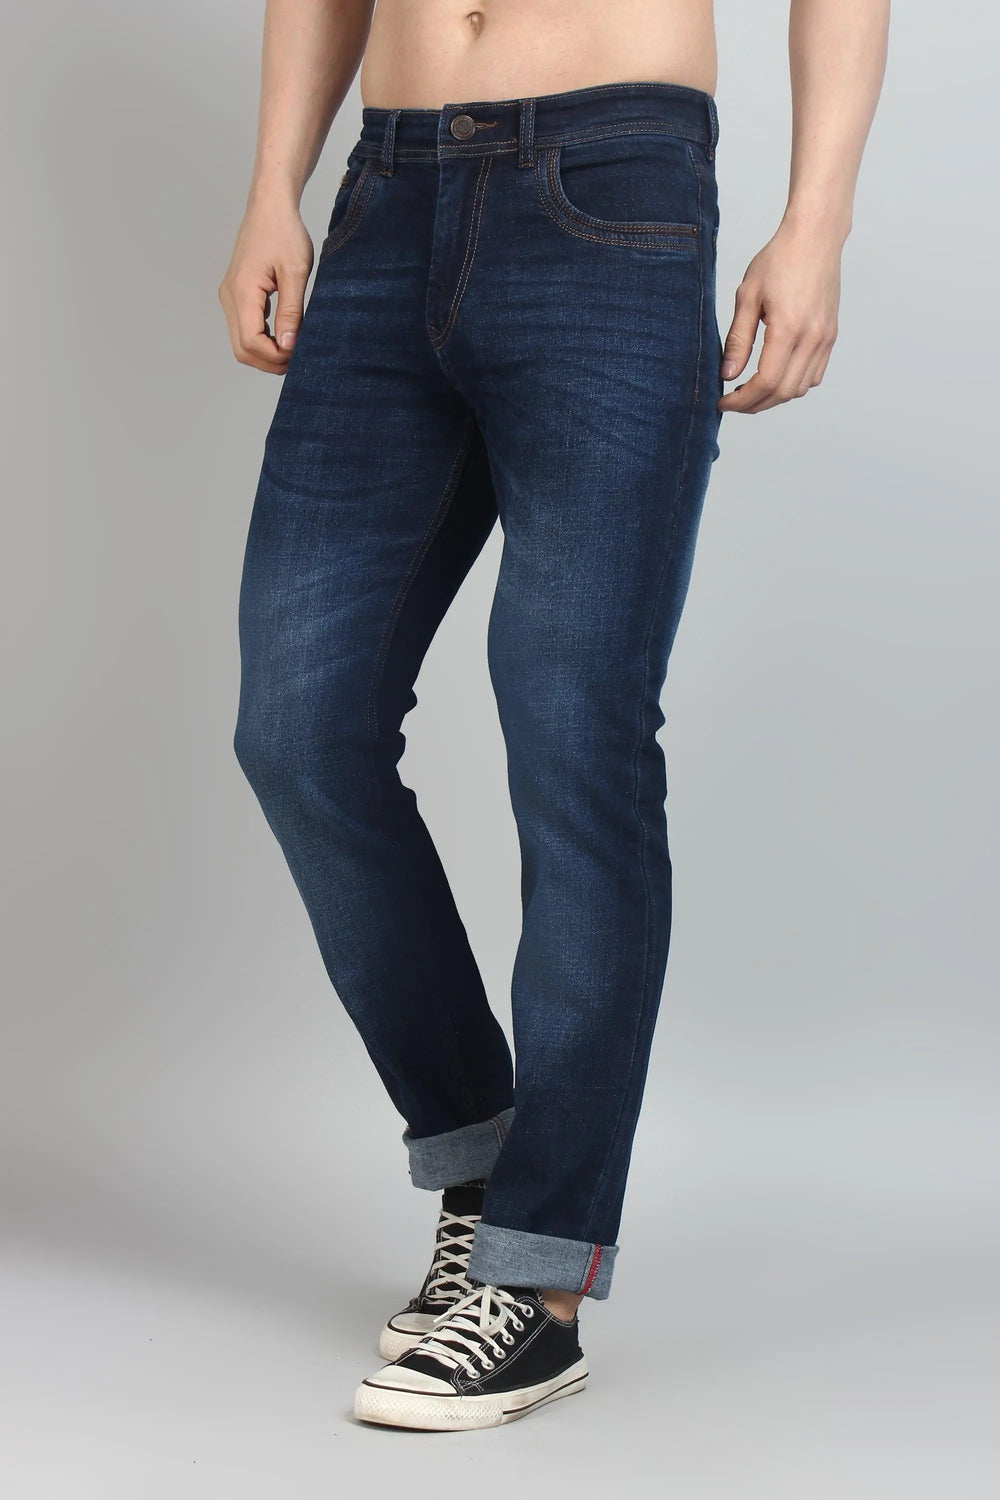 Relaxed Fit Dark Blue Premium Fabric Denim Jeans For Men - Peplos Jeans 